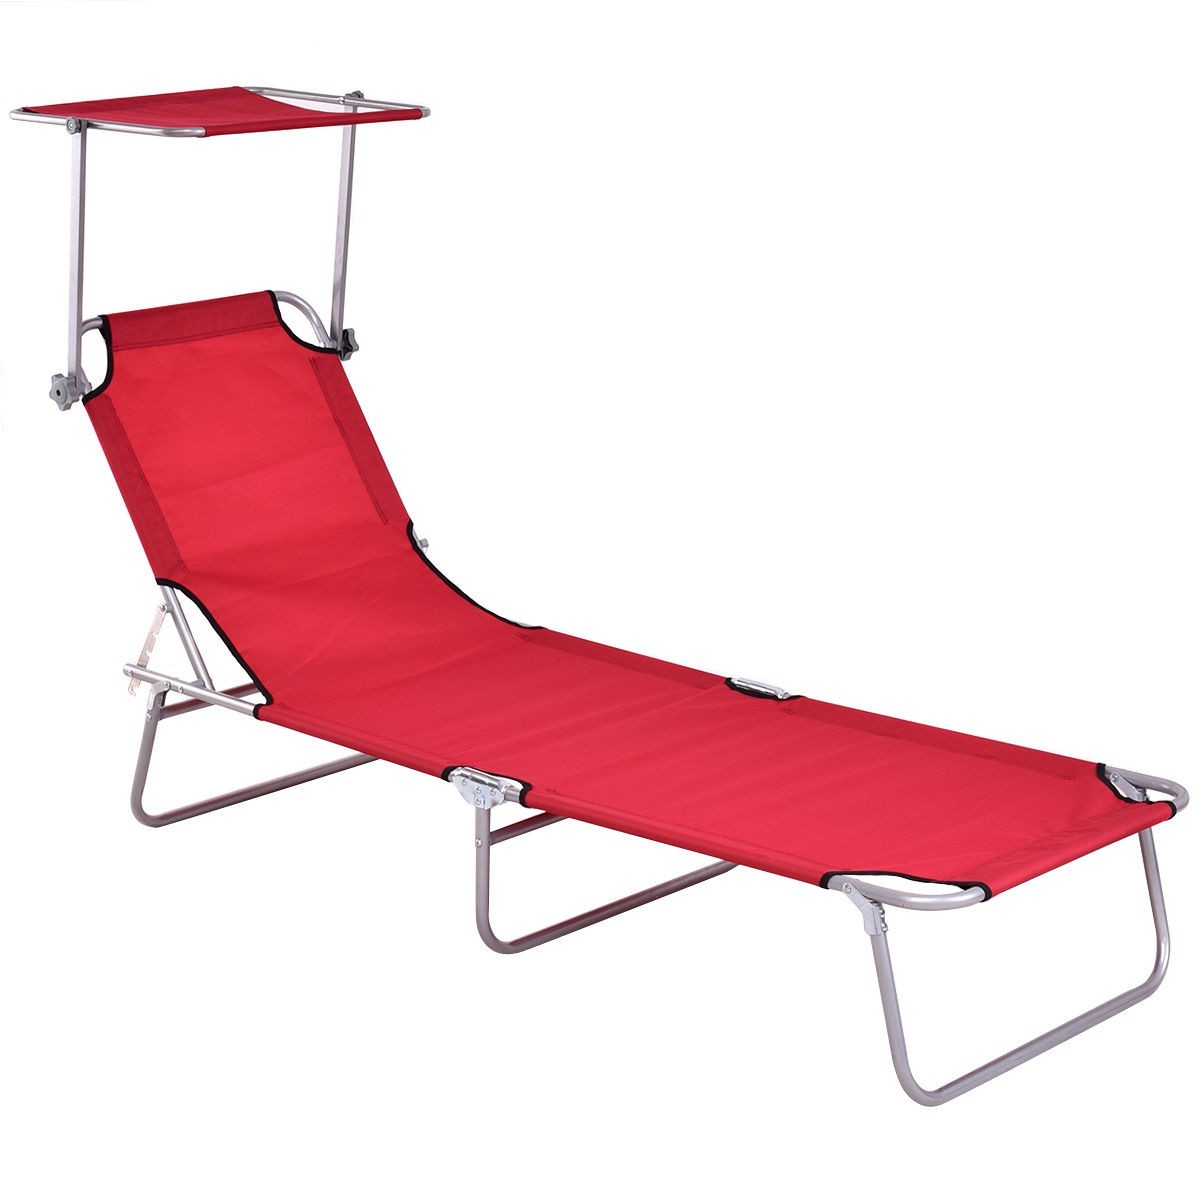 Foldable Relaxing Lounge Beach Chair - Black - Walmart.com